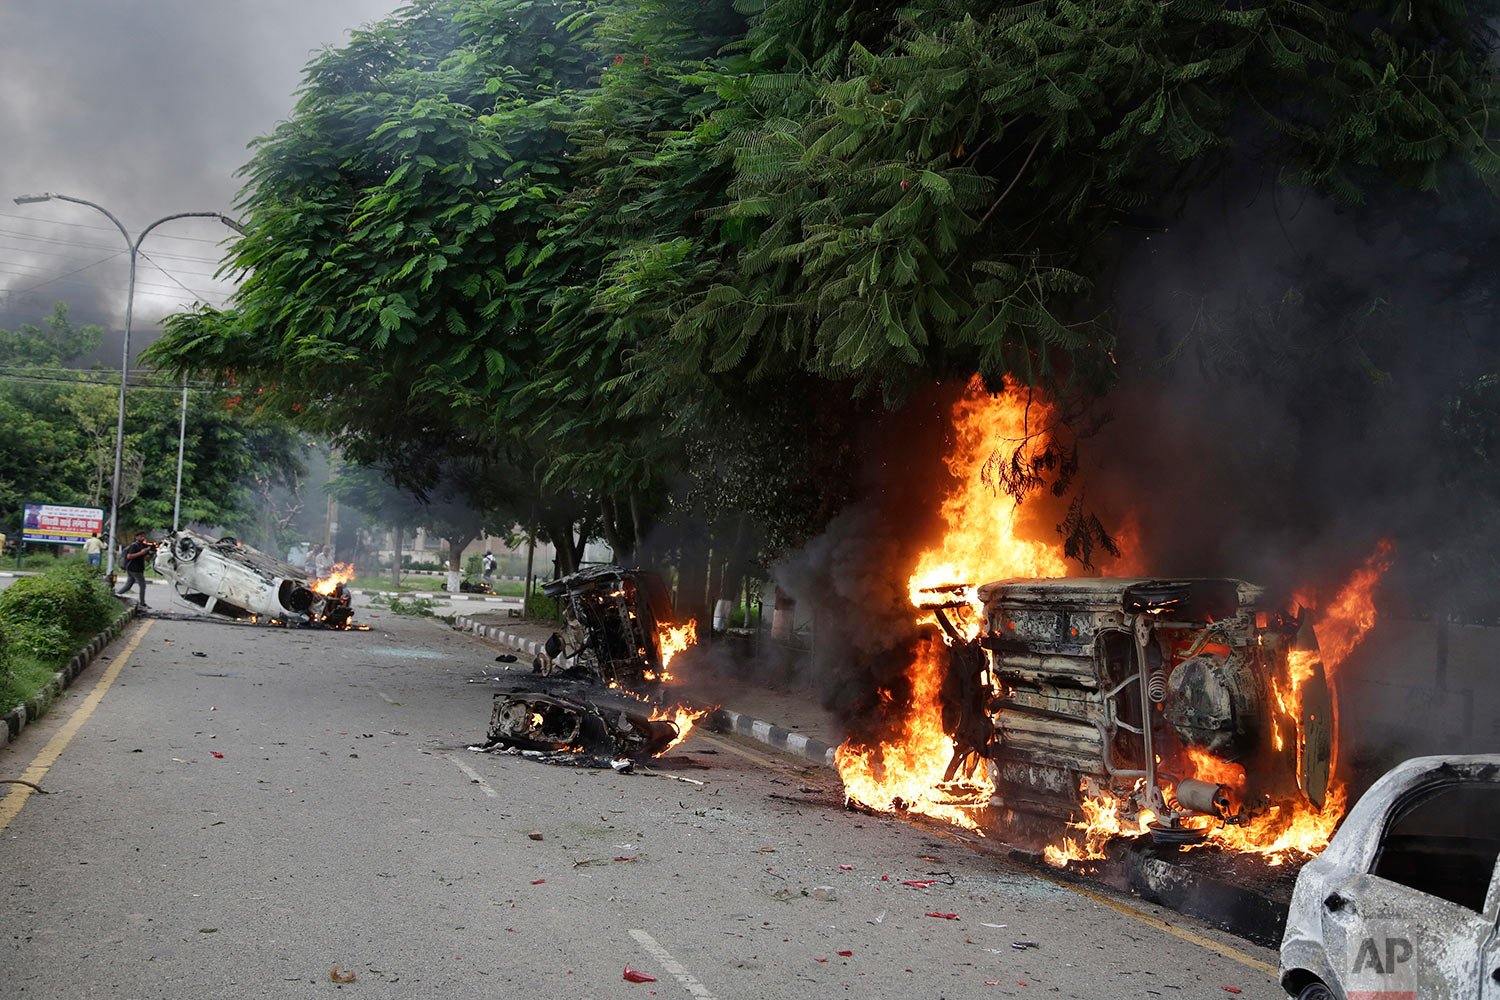  Vehicles set alight by Dera Sacha Sauda sect members burn in the streets of Panchkula, India, Friday, Aug. 25, 2017. (AP Photo/Altaf Qadri) 